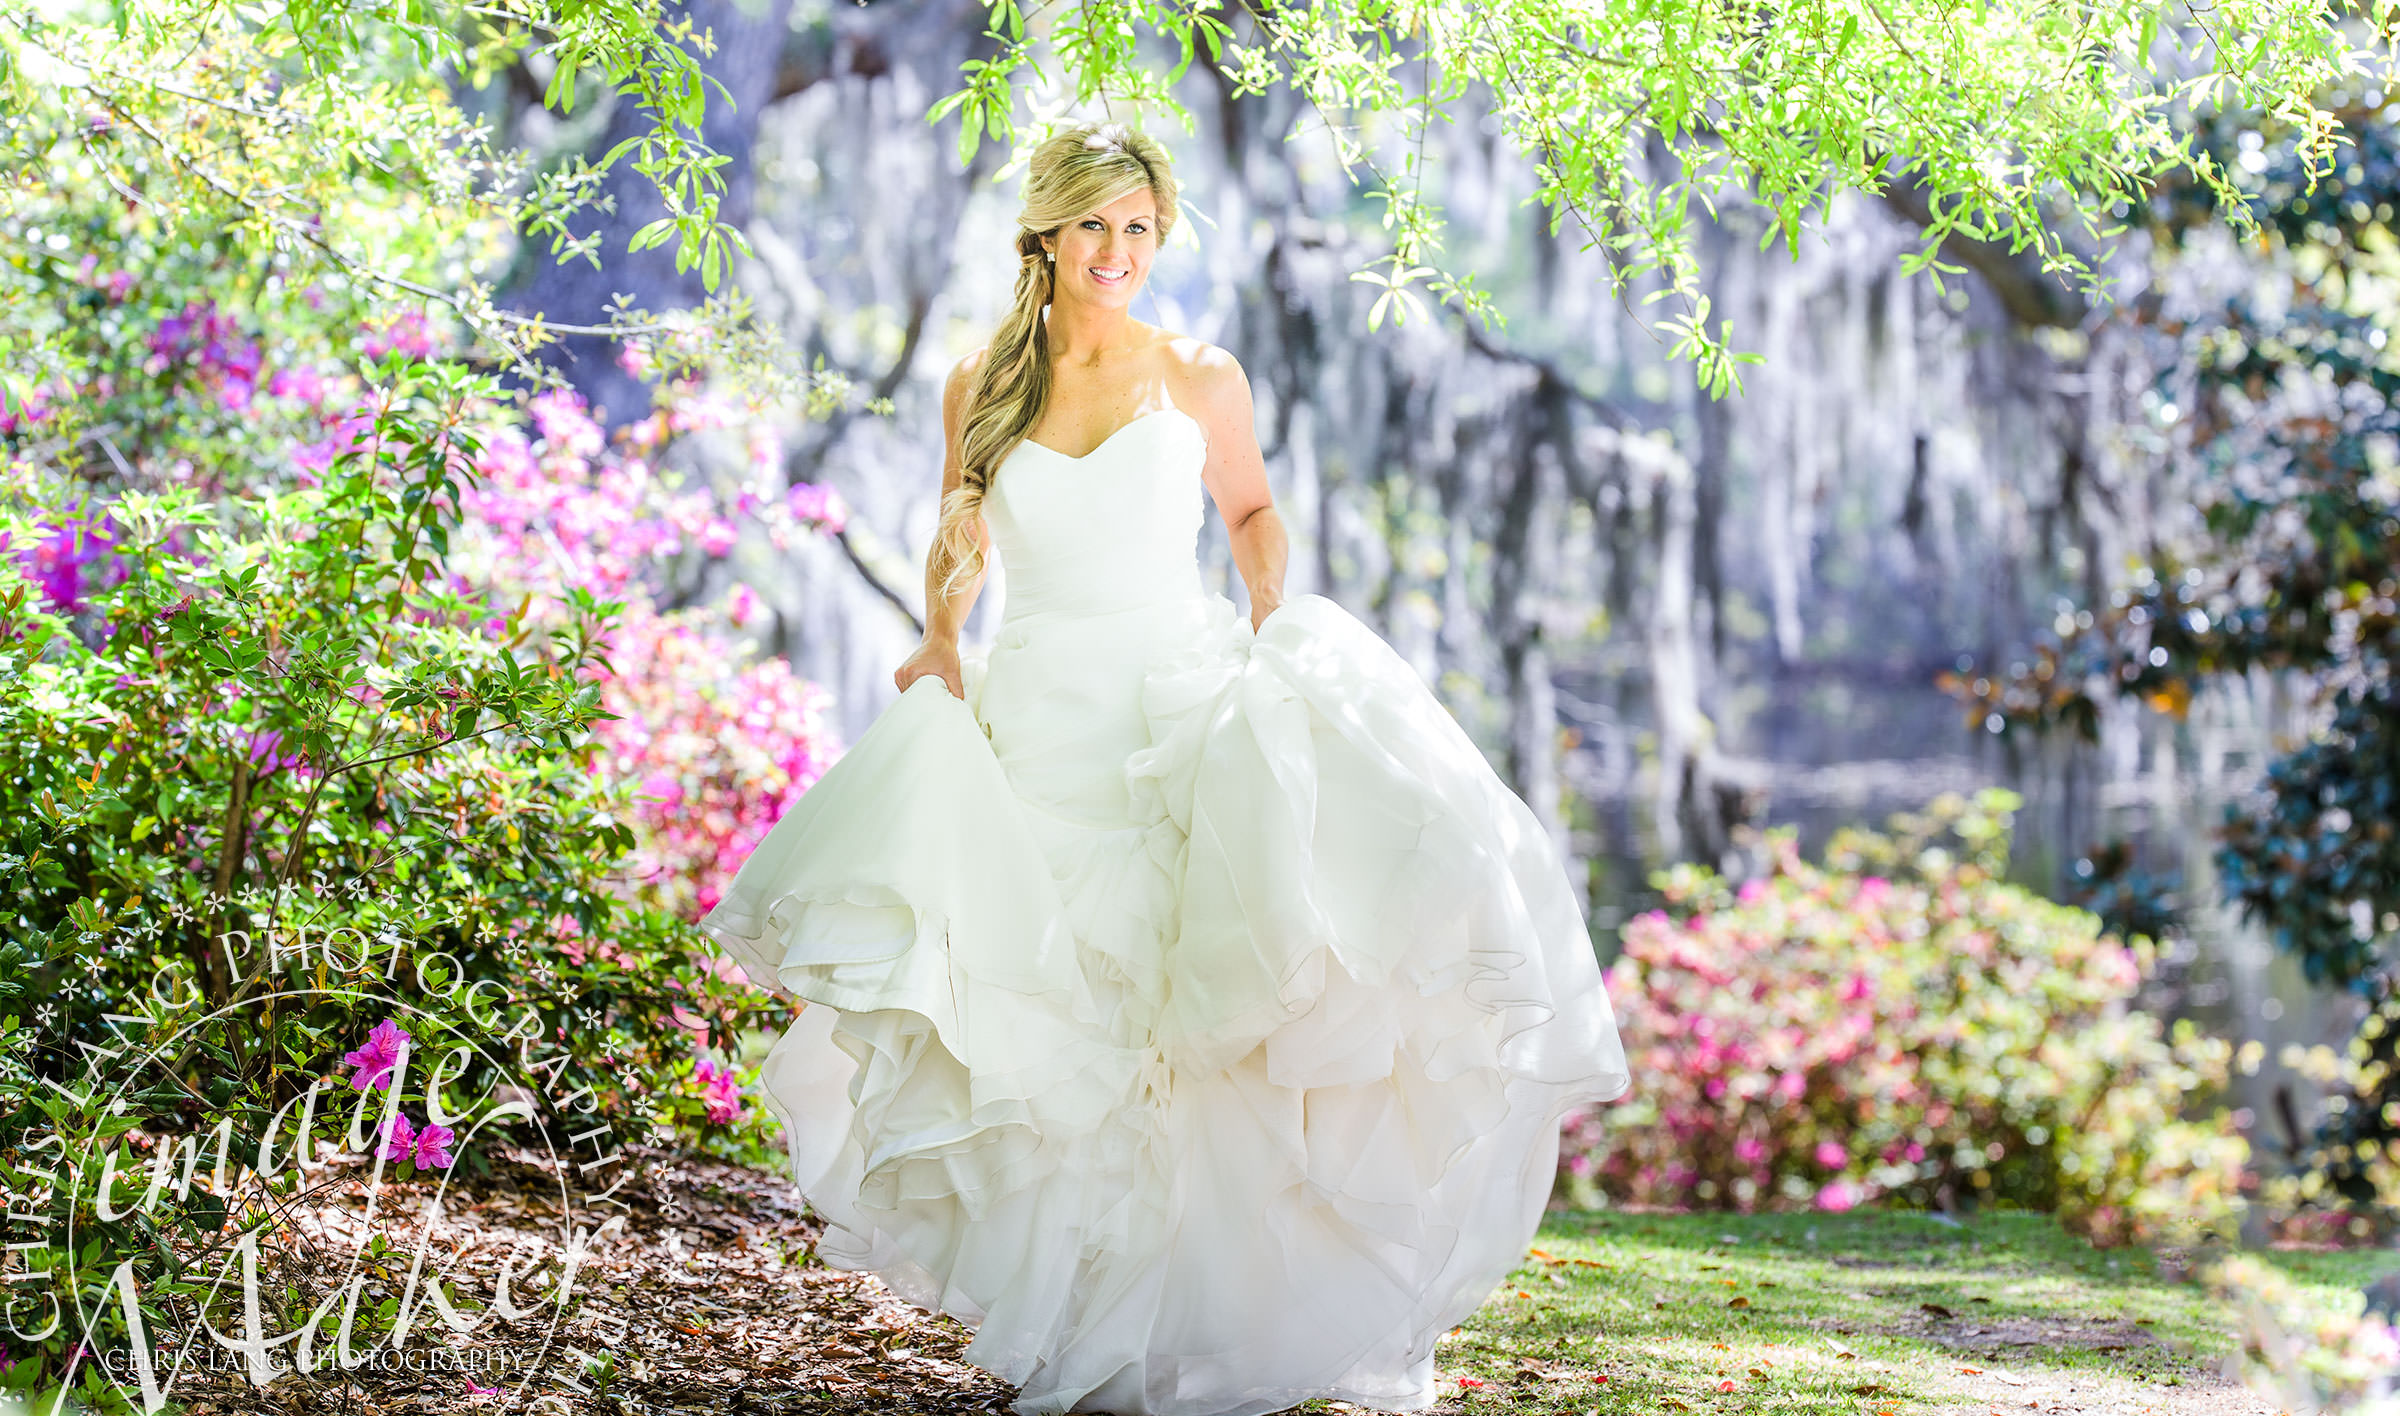 airlie gardens bride - brides - photos - wedding dress - bridal ideas - wedding day - wilmington nc wedding photography